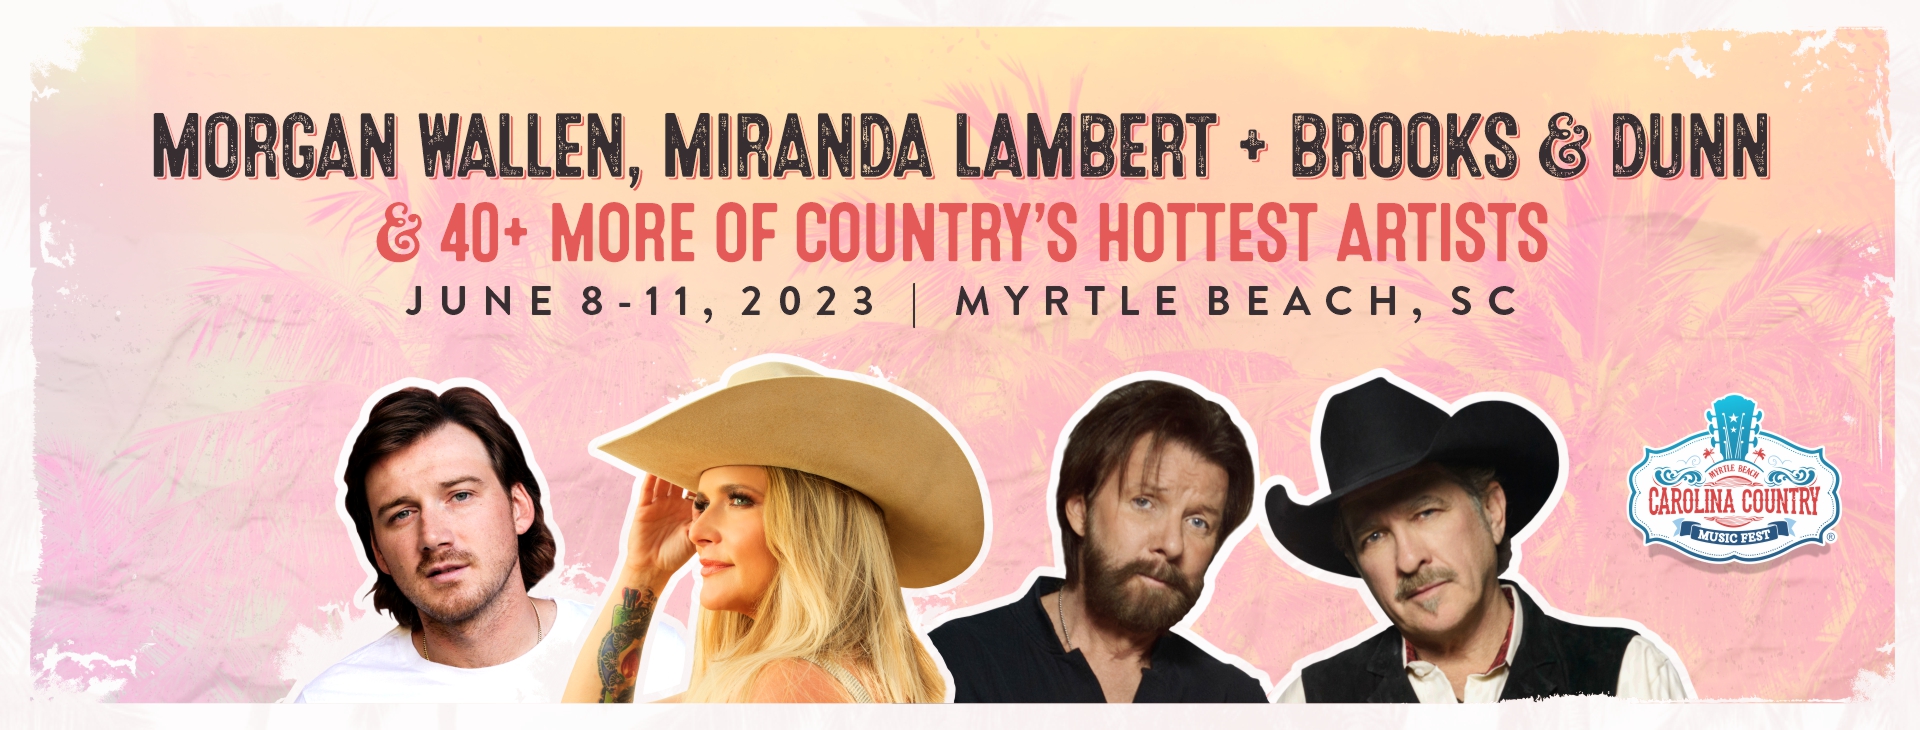 Carolina Country Music Fest - Morgan Wallen, Miranda Lambert, Brooks & Dunn